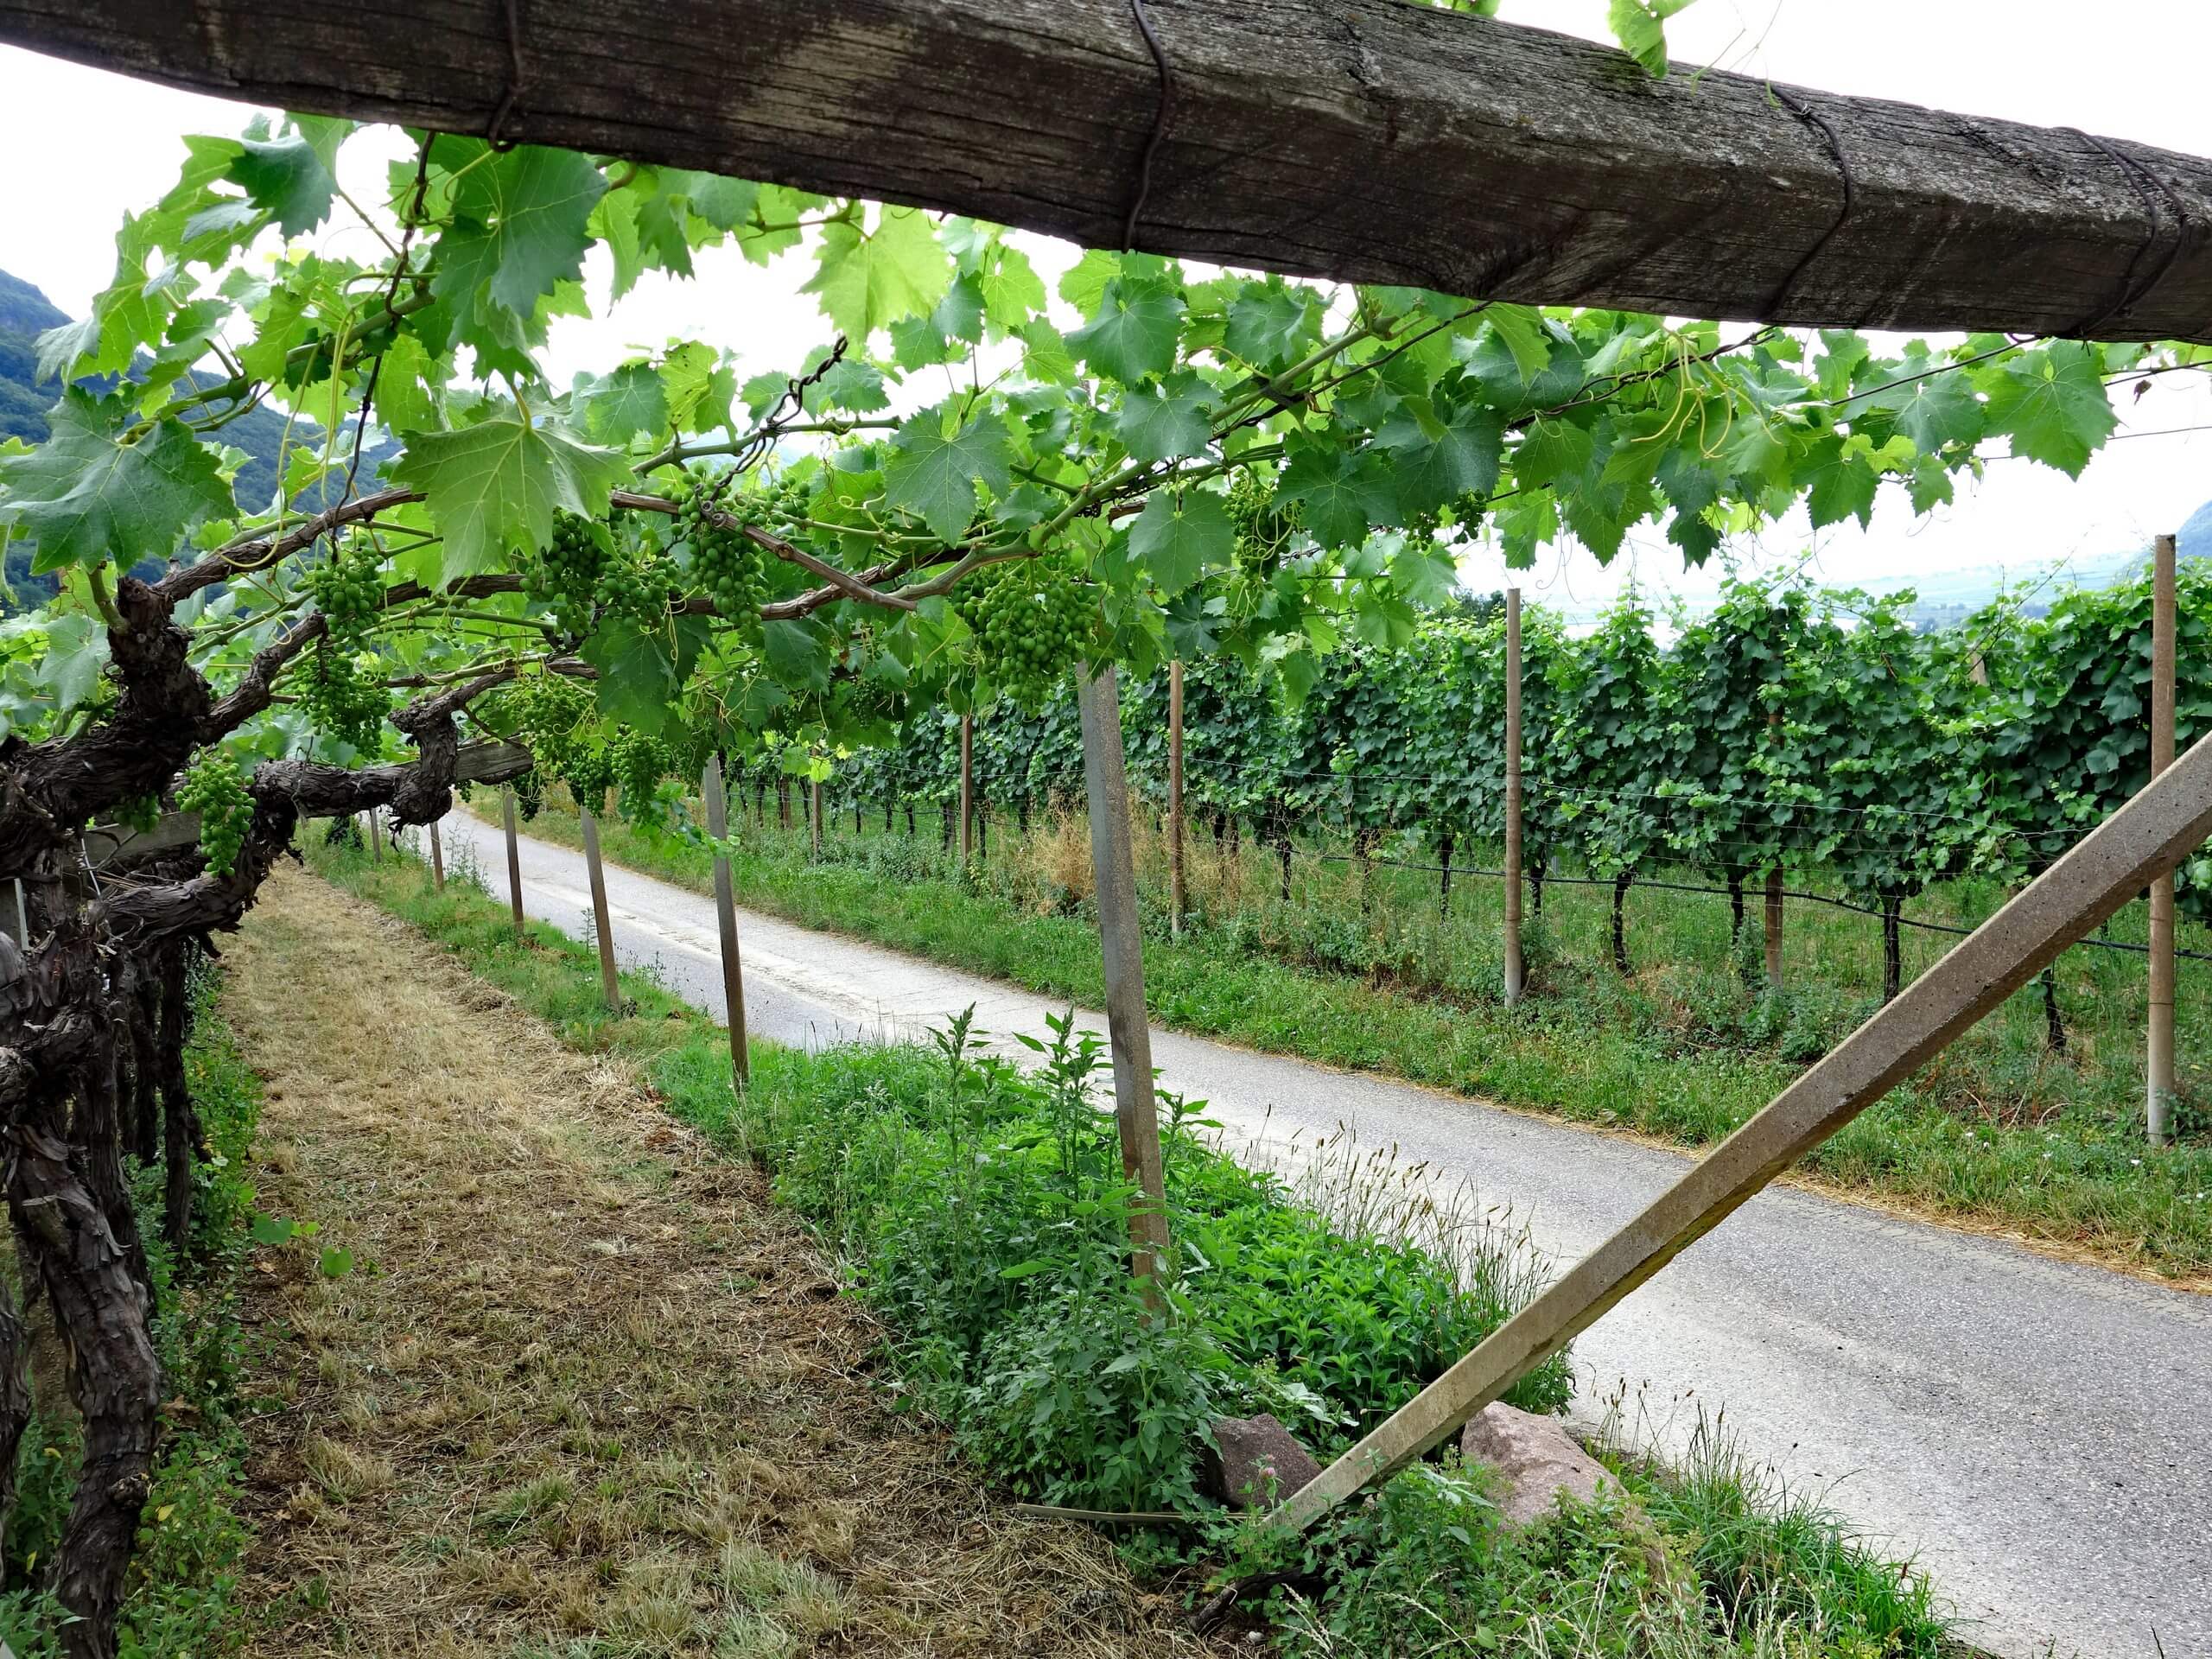 Biking path among the vineyards of South Tyrol